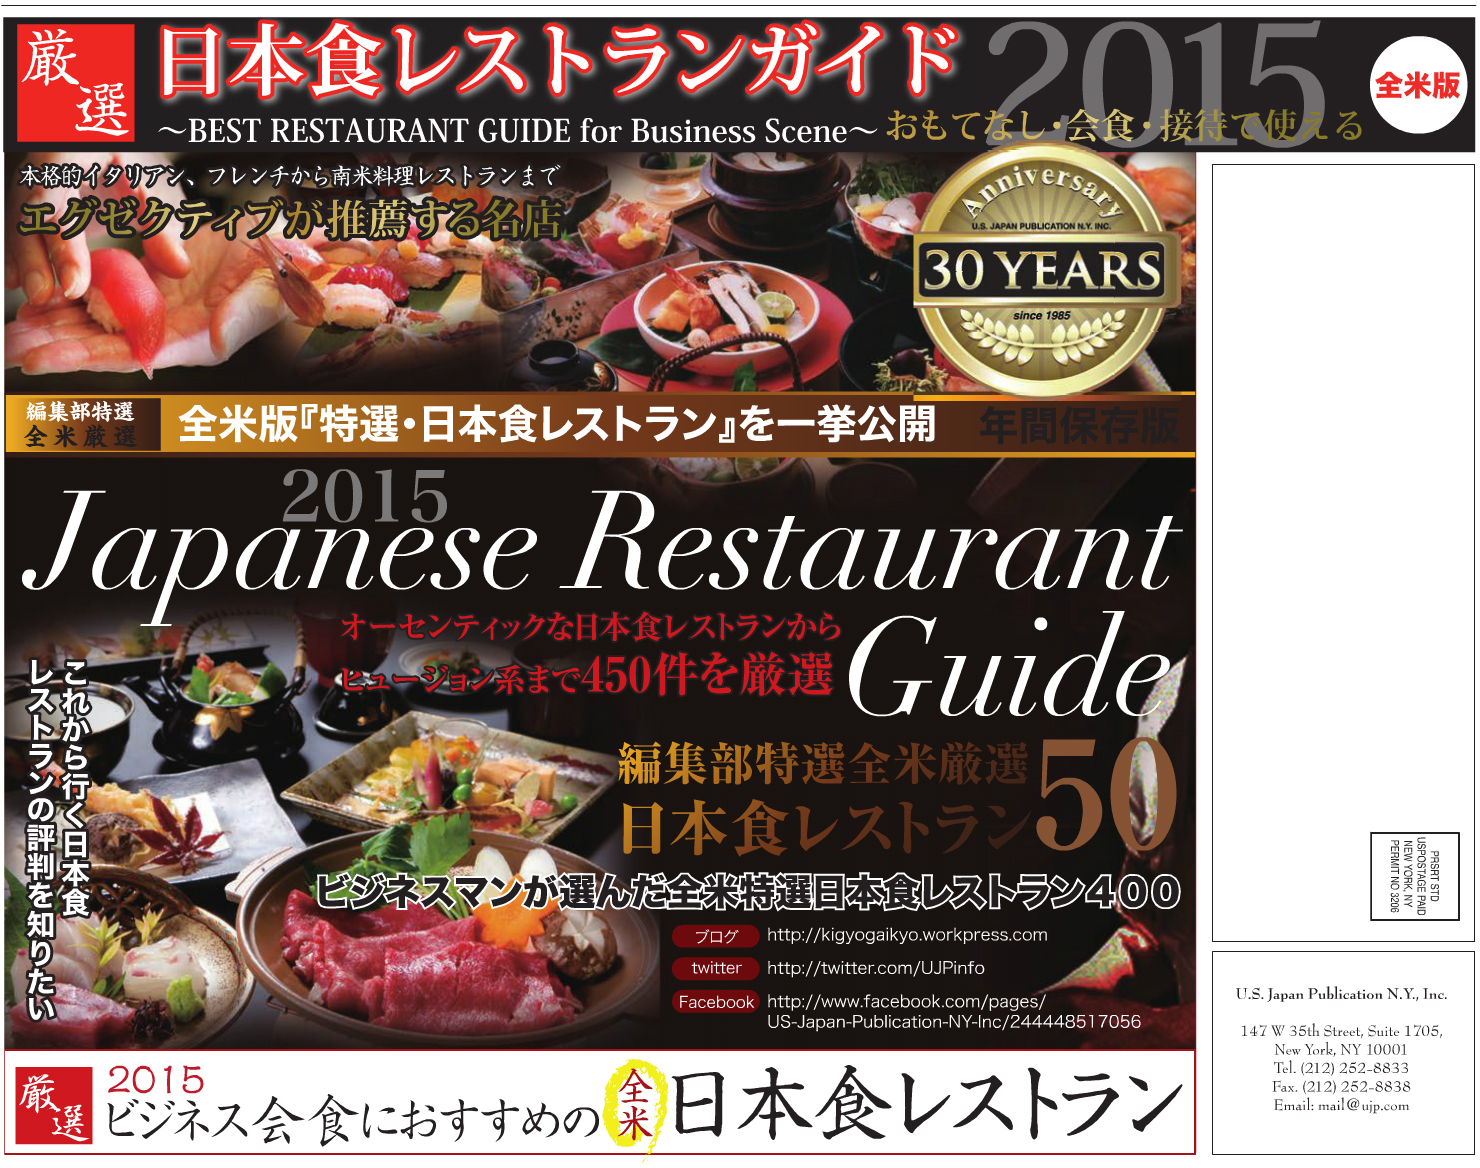 ujp us japan publication, japanese restaurant guide, special select 50, naoe